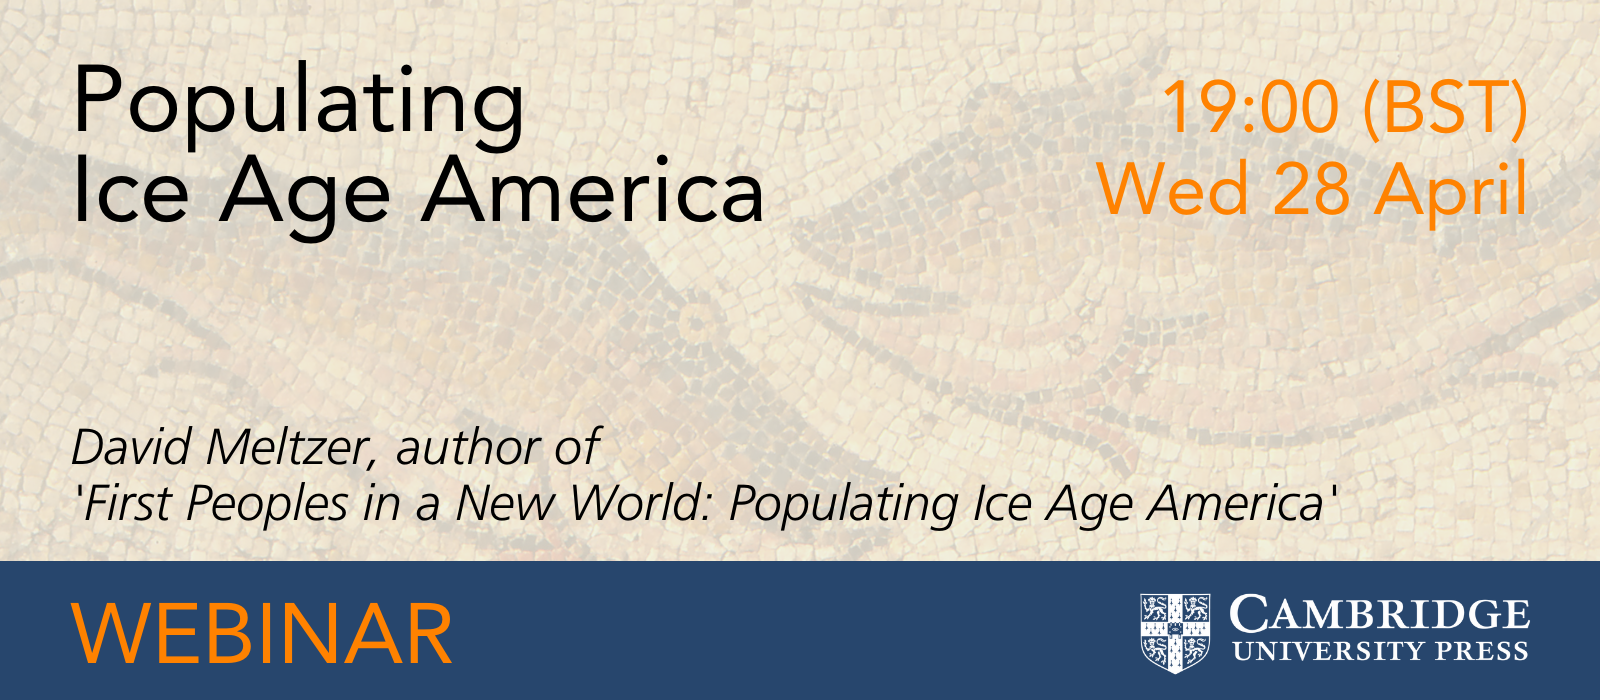 18 April - Populating Ice Age America - The Cambridge Forum webinar series